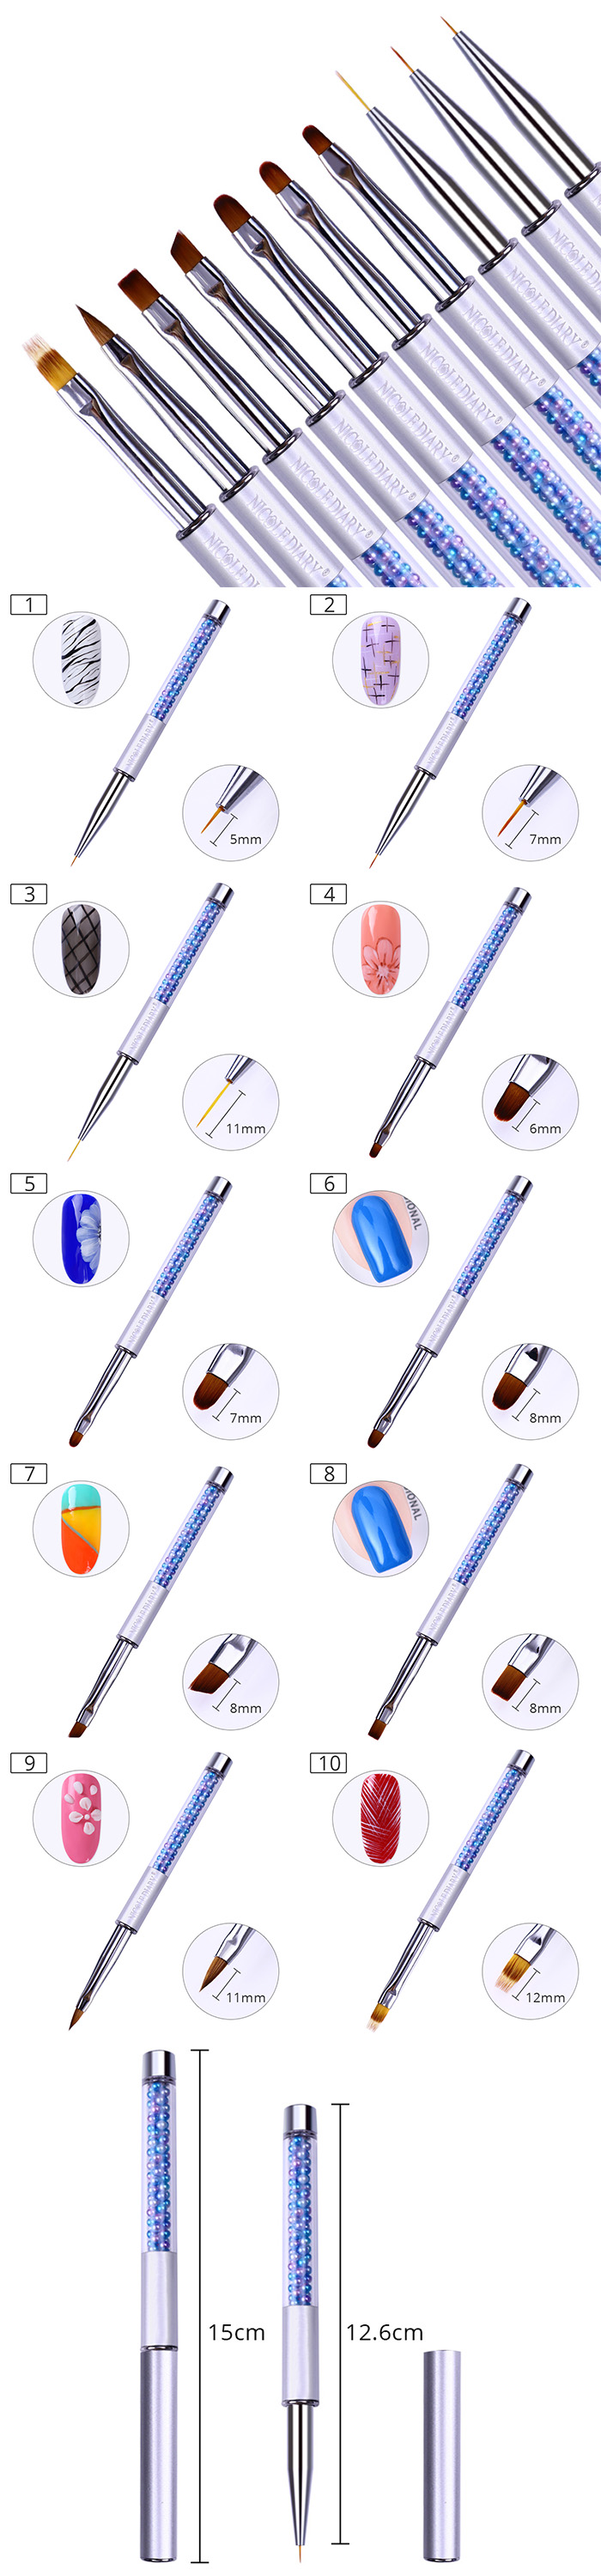 NICOLE DIARY UV Gel Brush Liner Painting Pen Acrylic Drawing Brush for Nails Gradient Rhinestone Handle Manicure Nail Art Tool